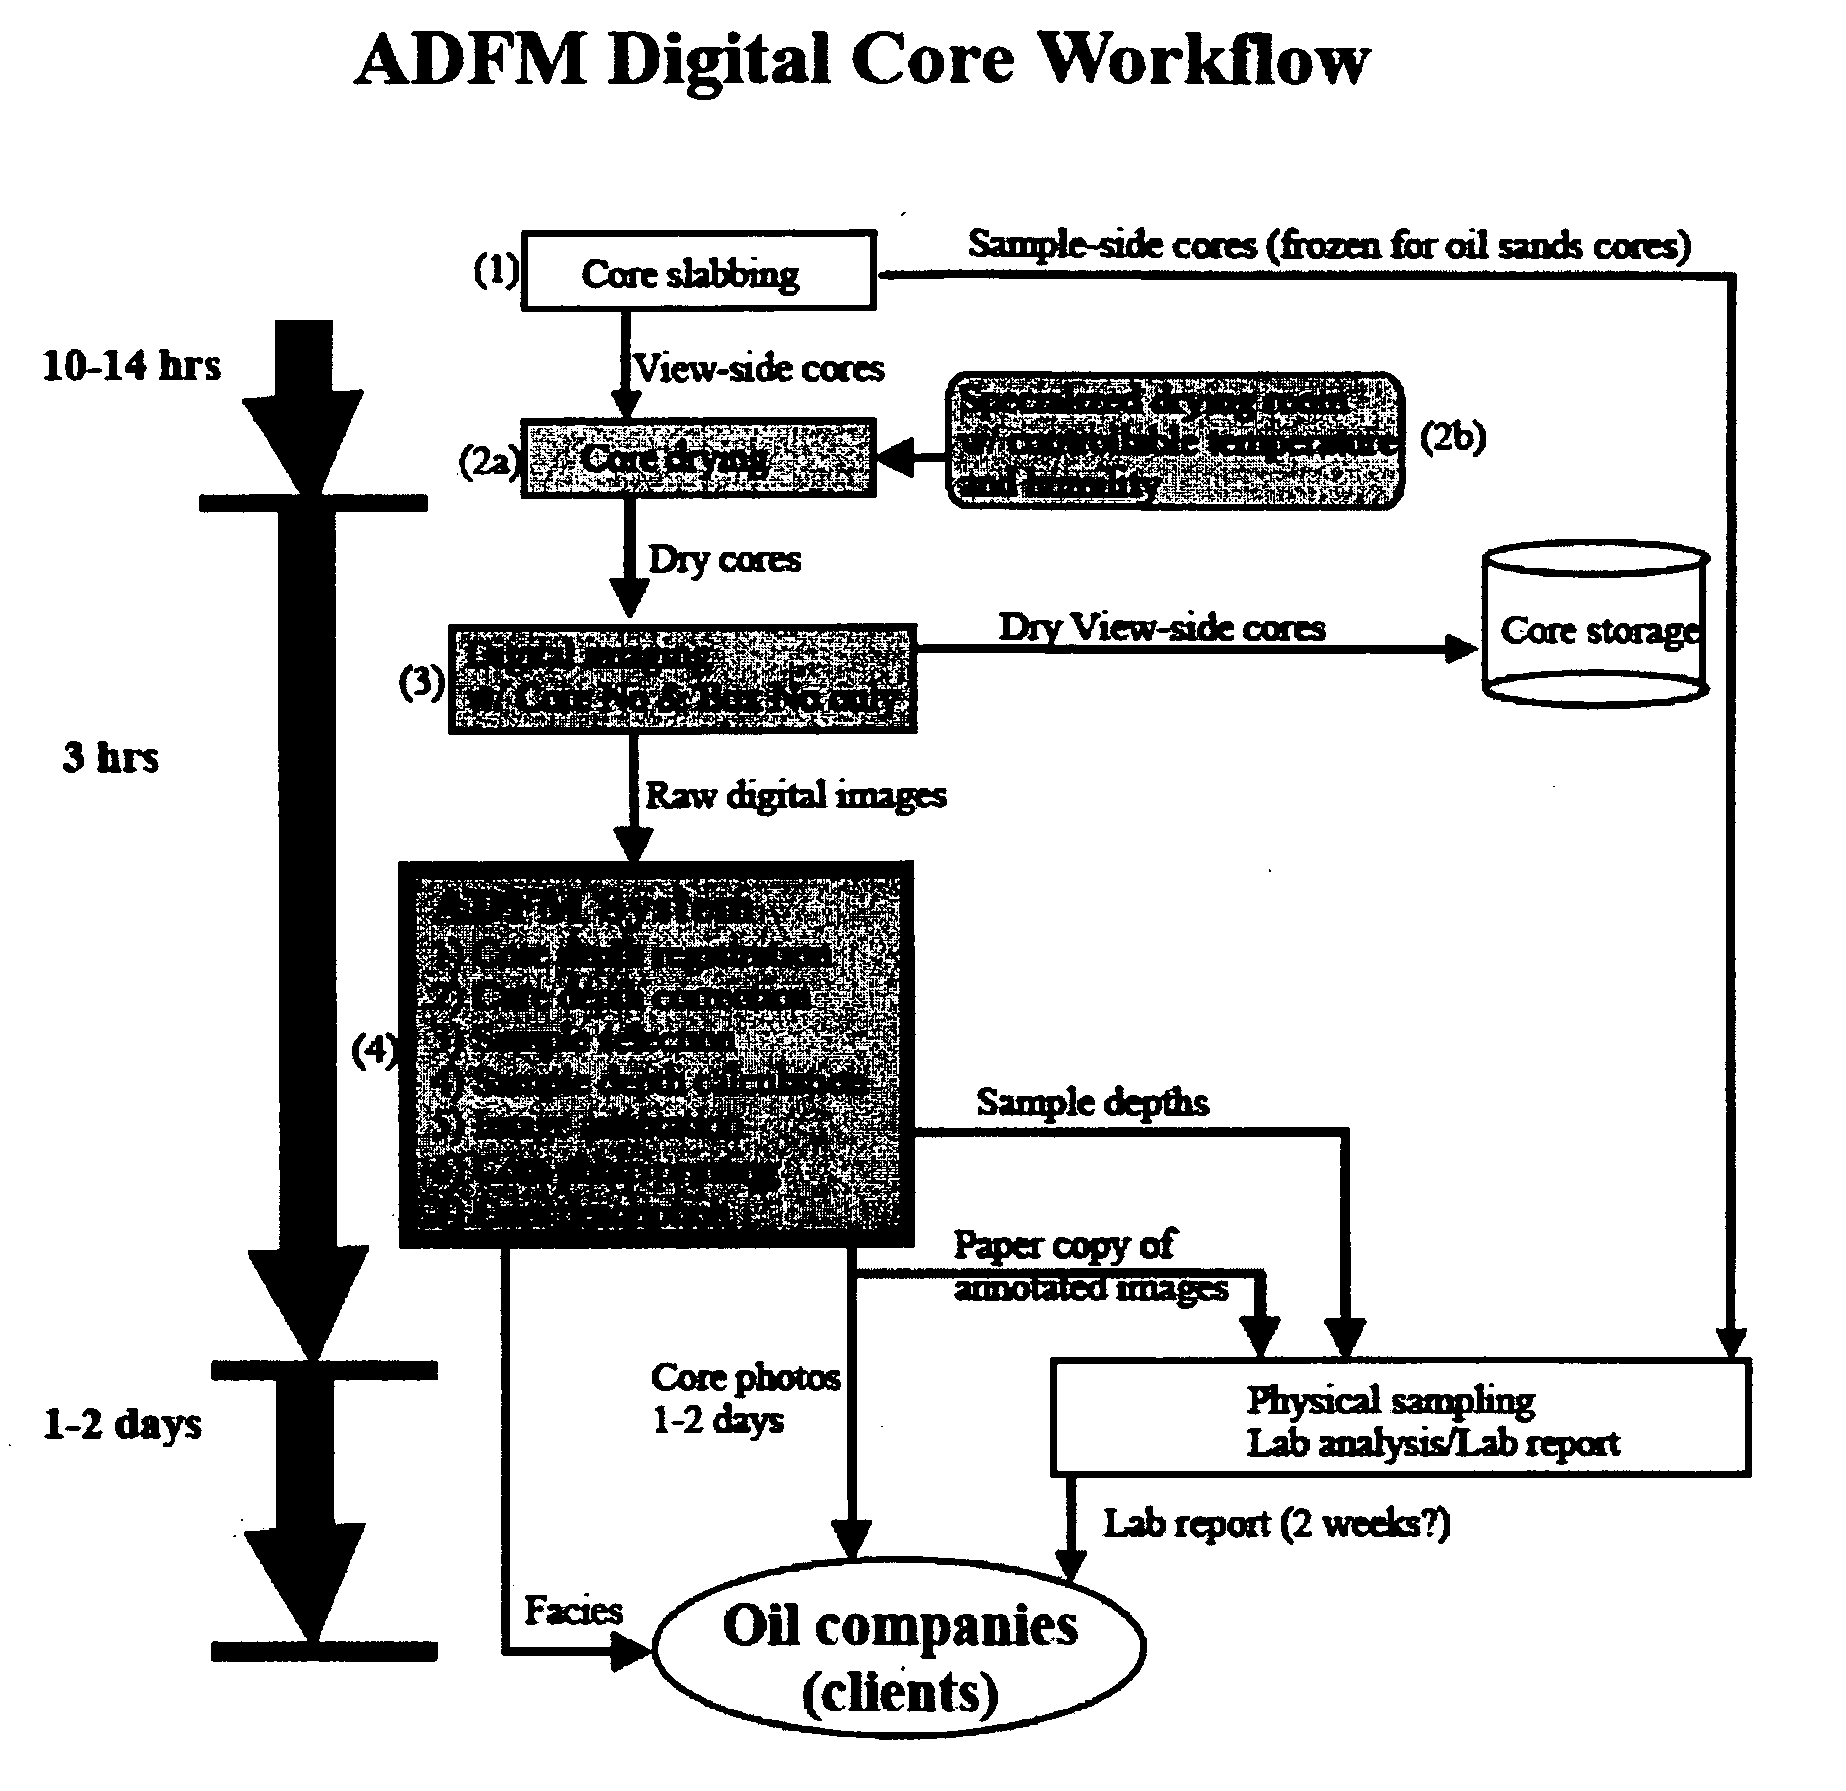 Digital core workflow method using digital core image